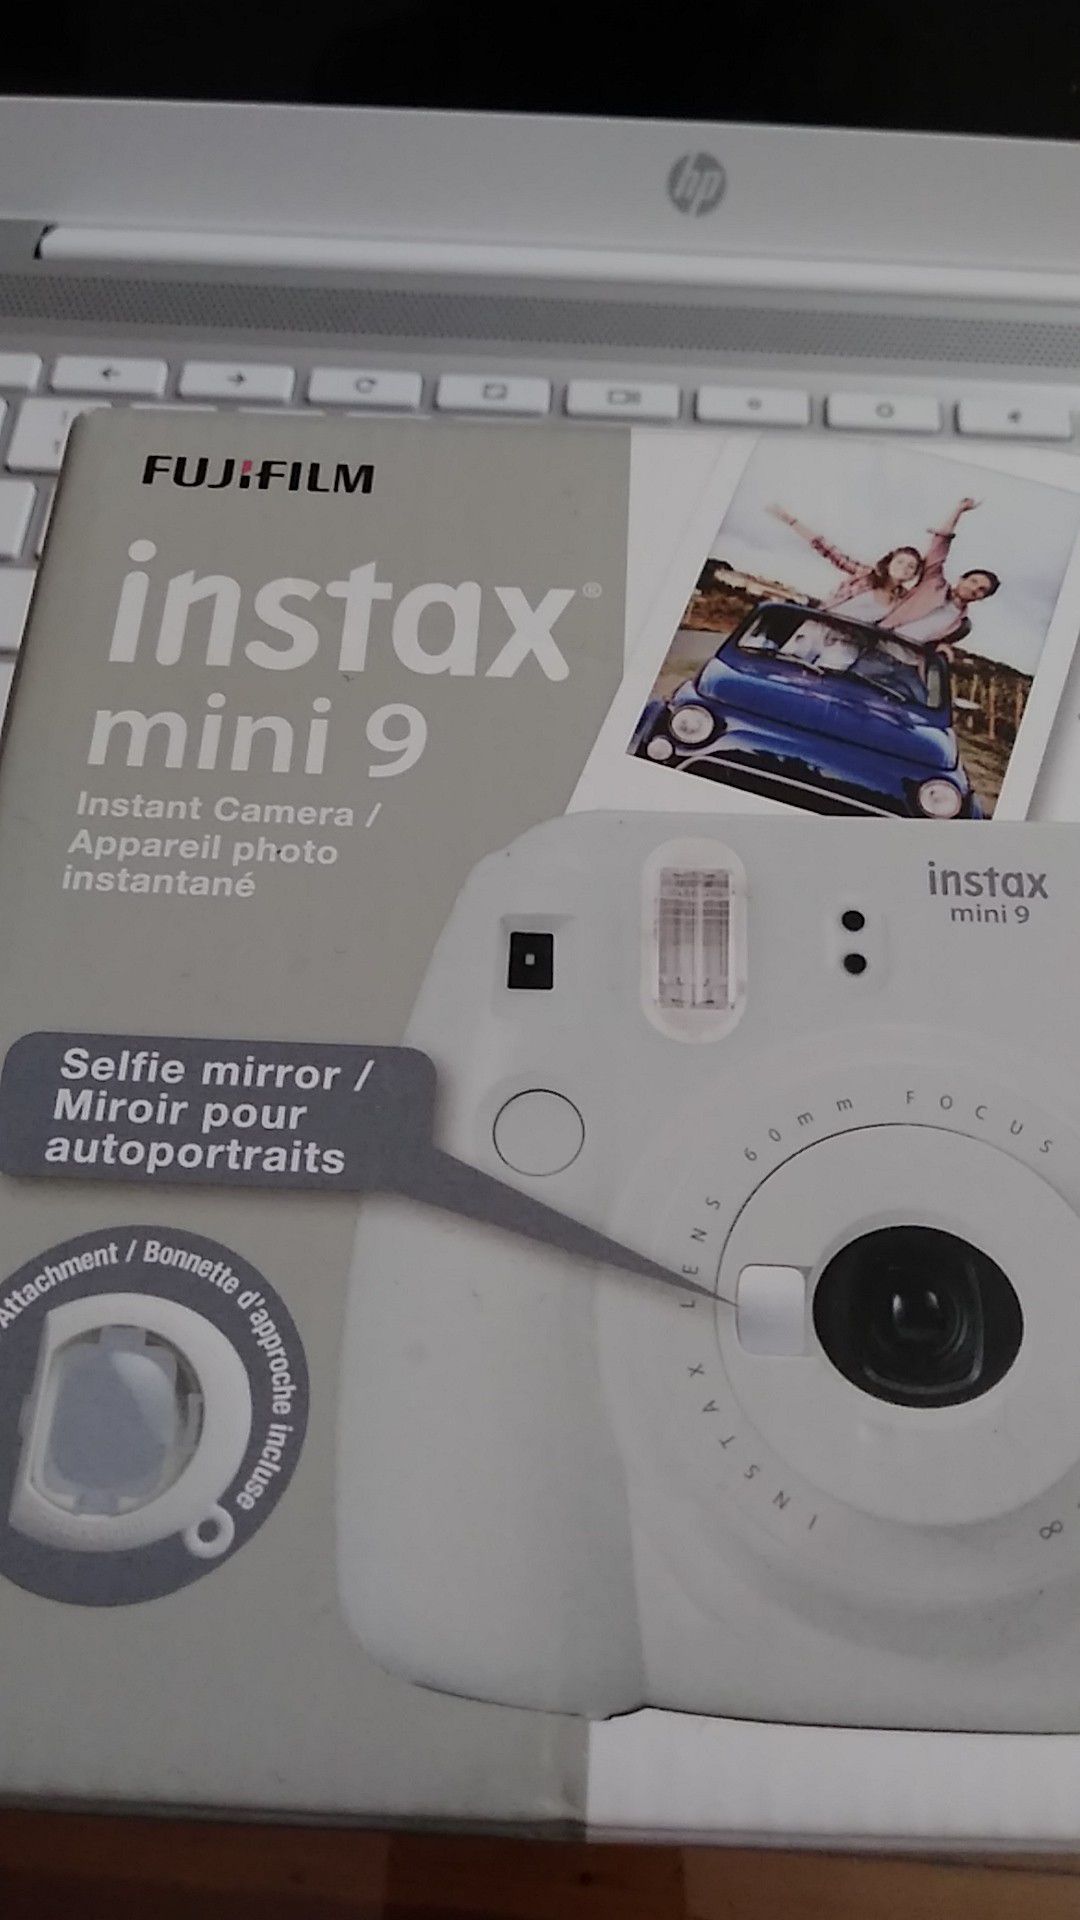 Brand new instax mini 9. In the box.